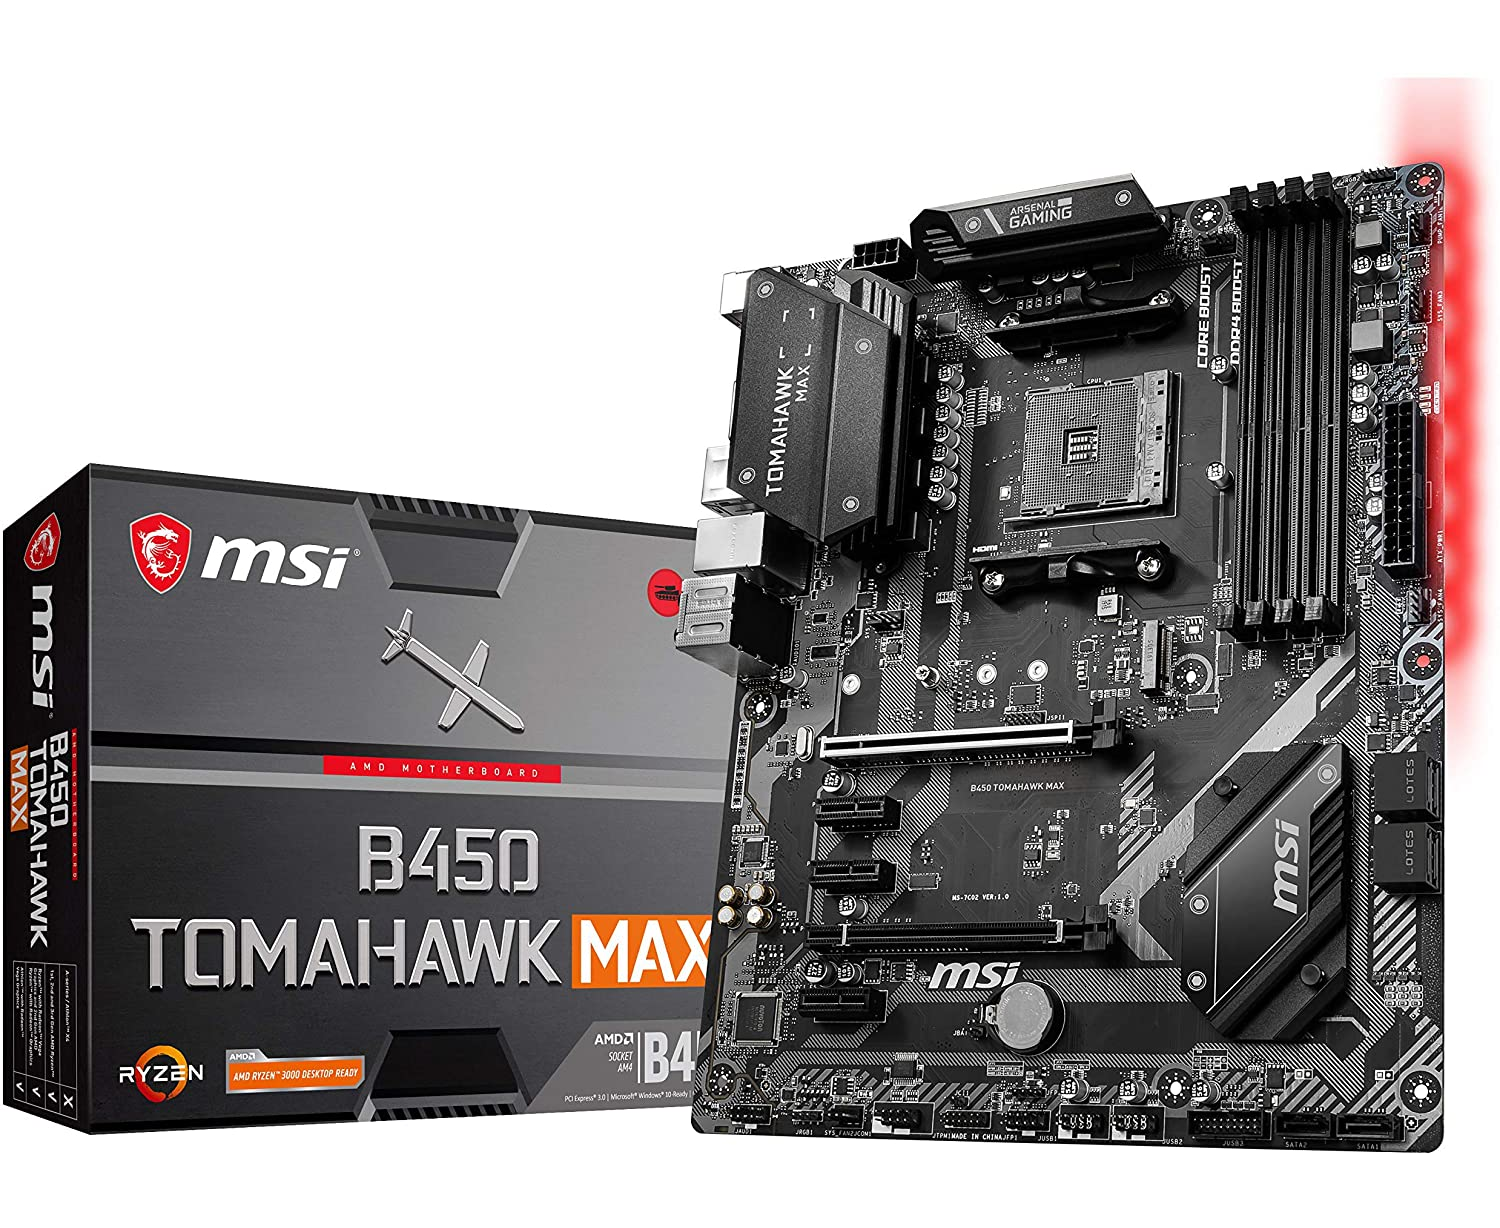 msi b450 tomahawk max